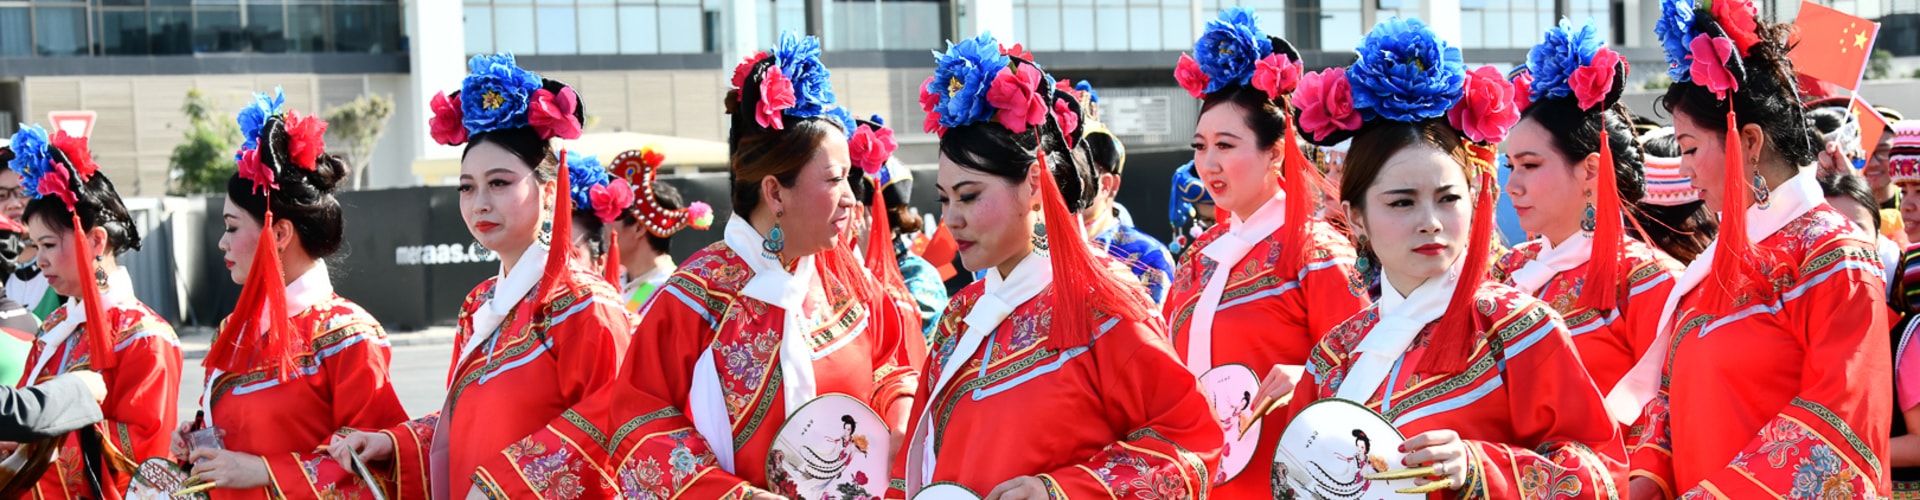 Celebrate Chinese New Year in Dubai across Meraas destinations 